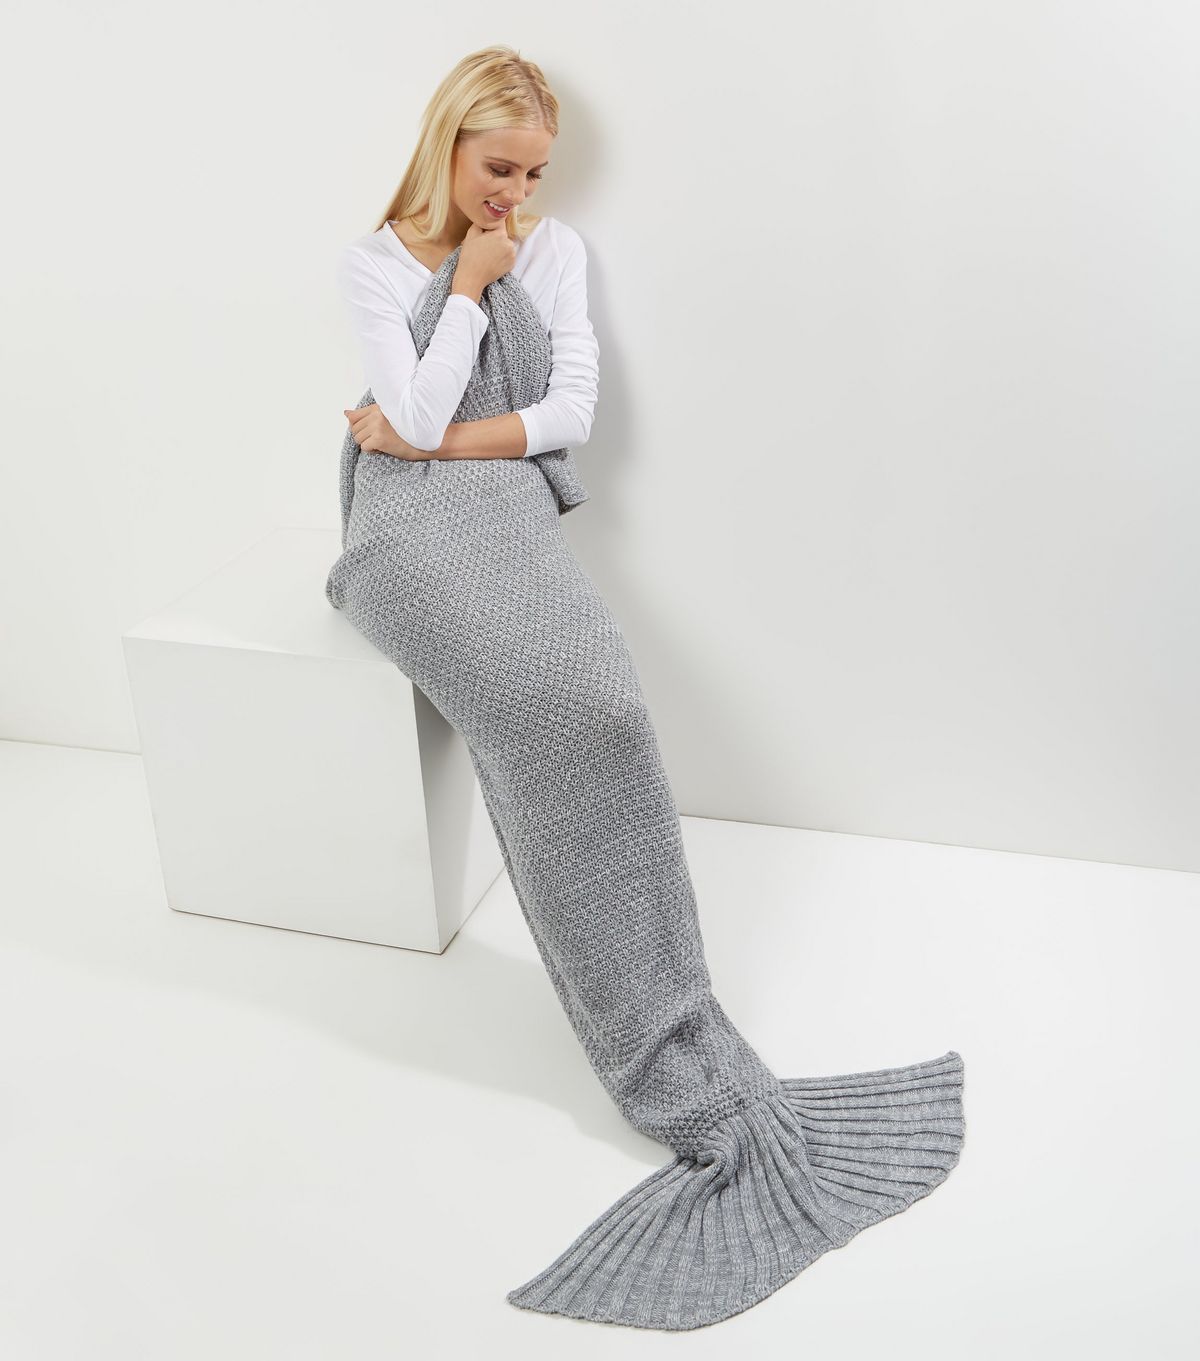 http://media.newlookassets.com/i/newlook/509064104/womens/home/mermaid-blankets/grey-mermaid-tail-blanket/?$new_pdp_szoom_image_1200$